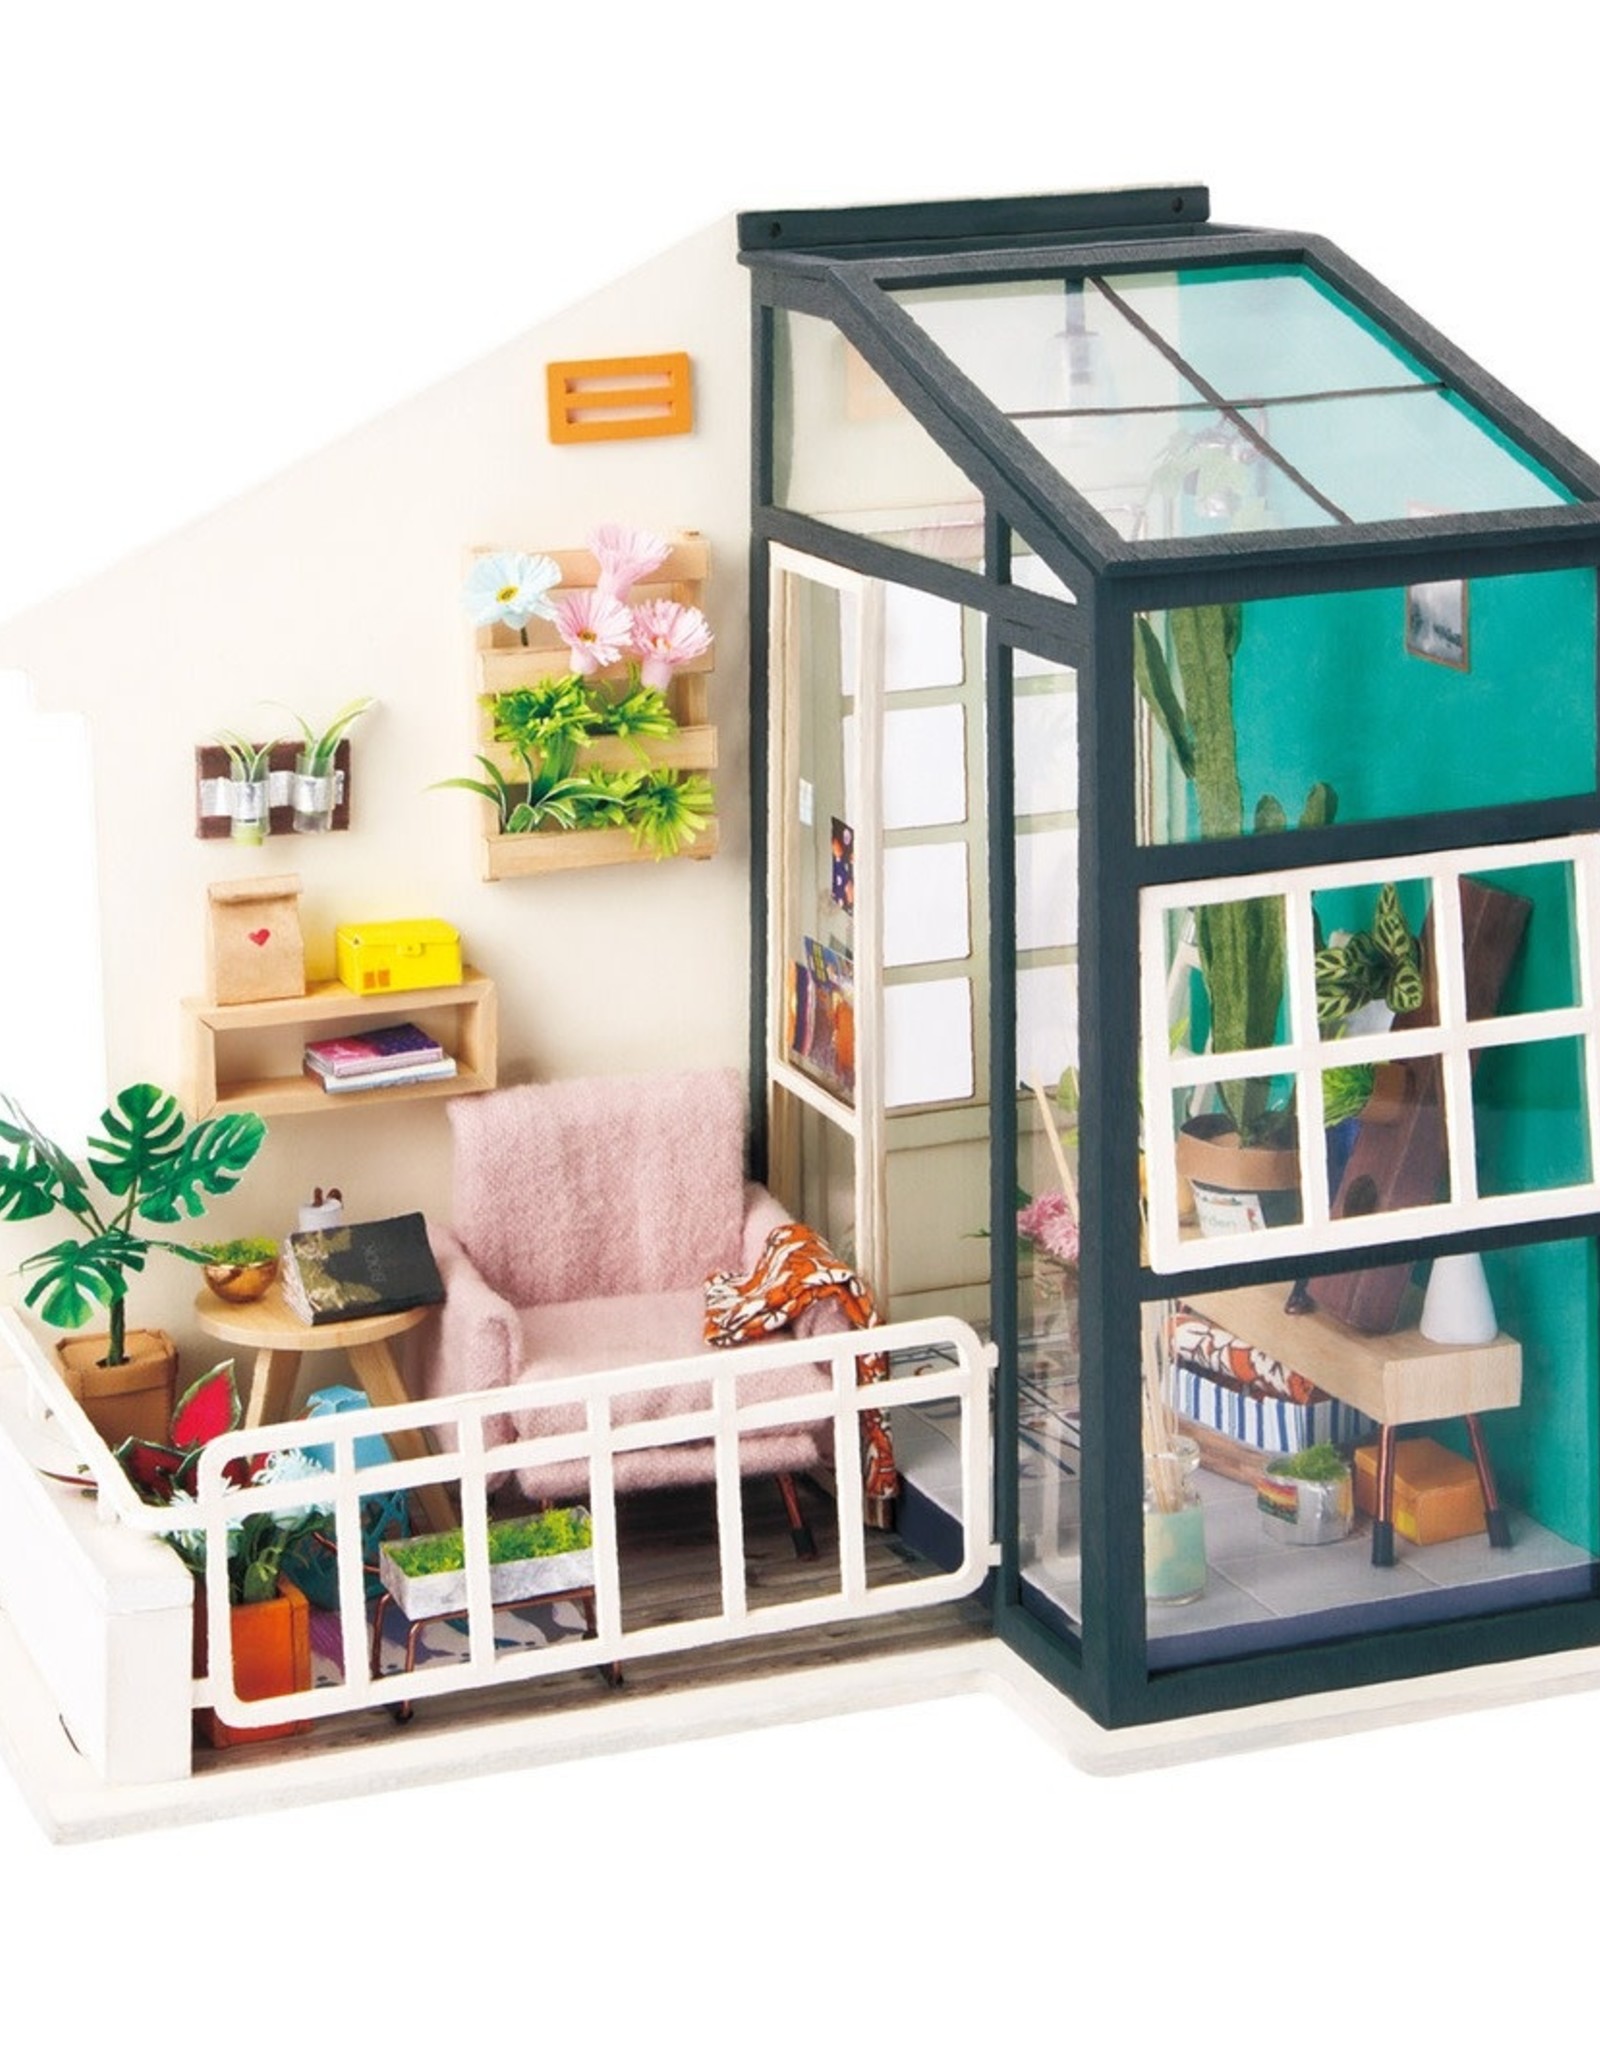 Robotime Balcony Daydreaming - DIY Miniature House